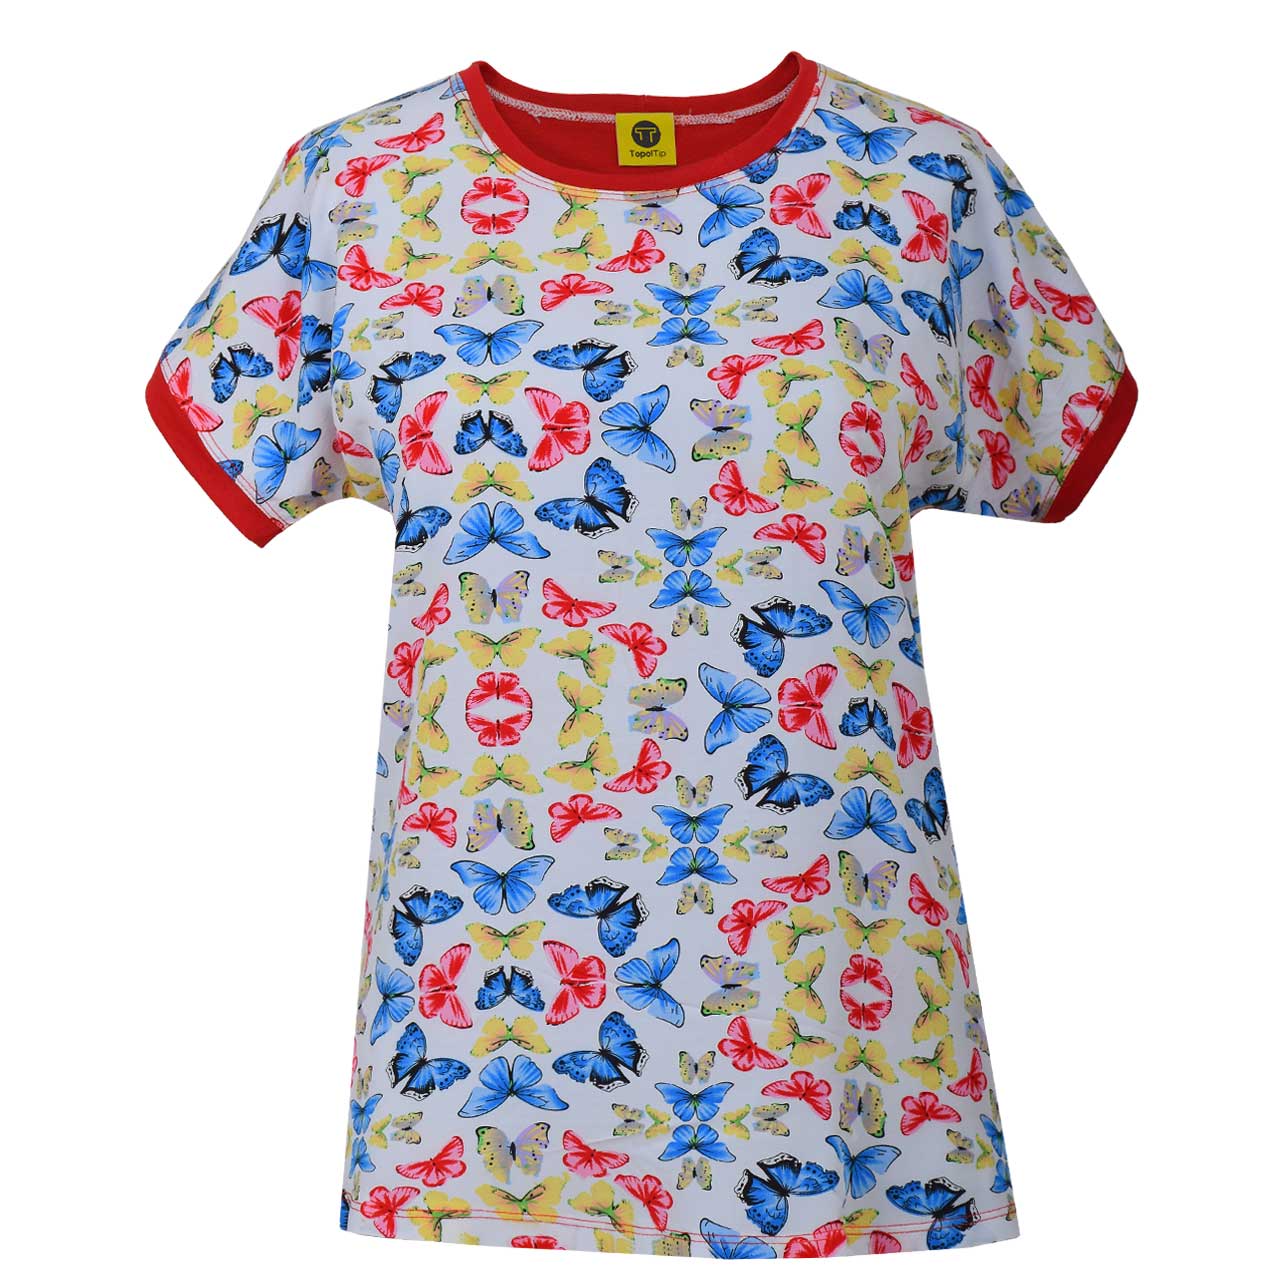 تی شرت زنانه تپل تیپ طرح پروانه کد 0001-175